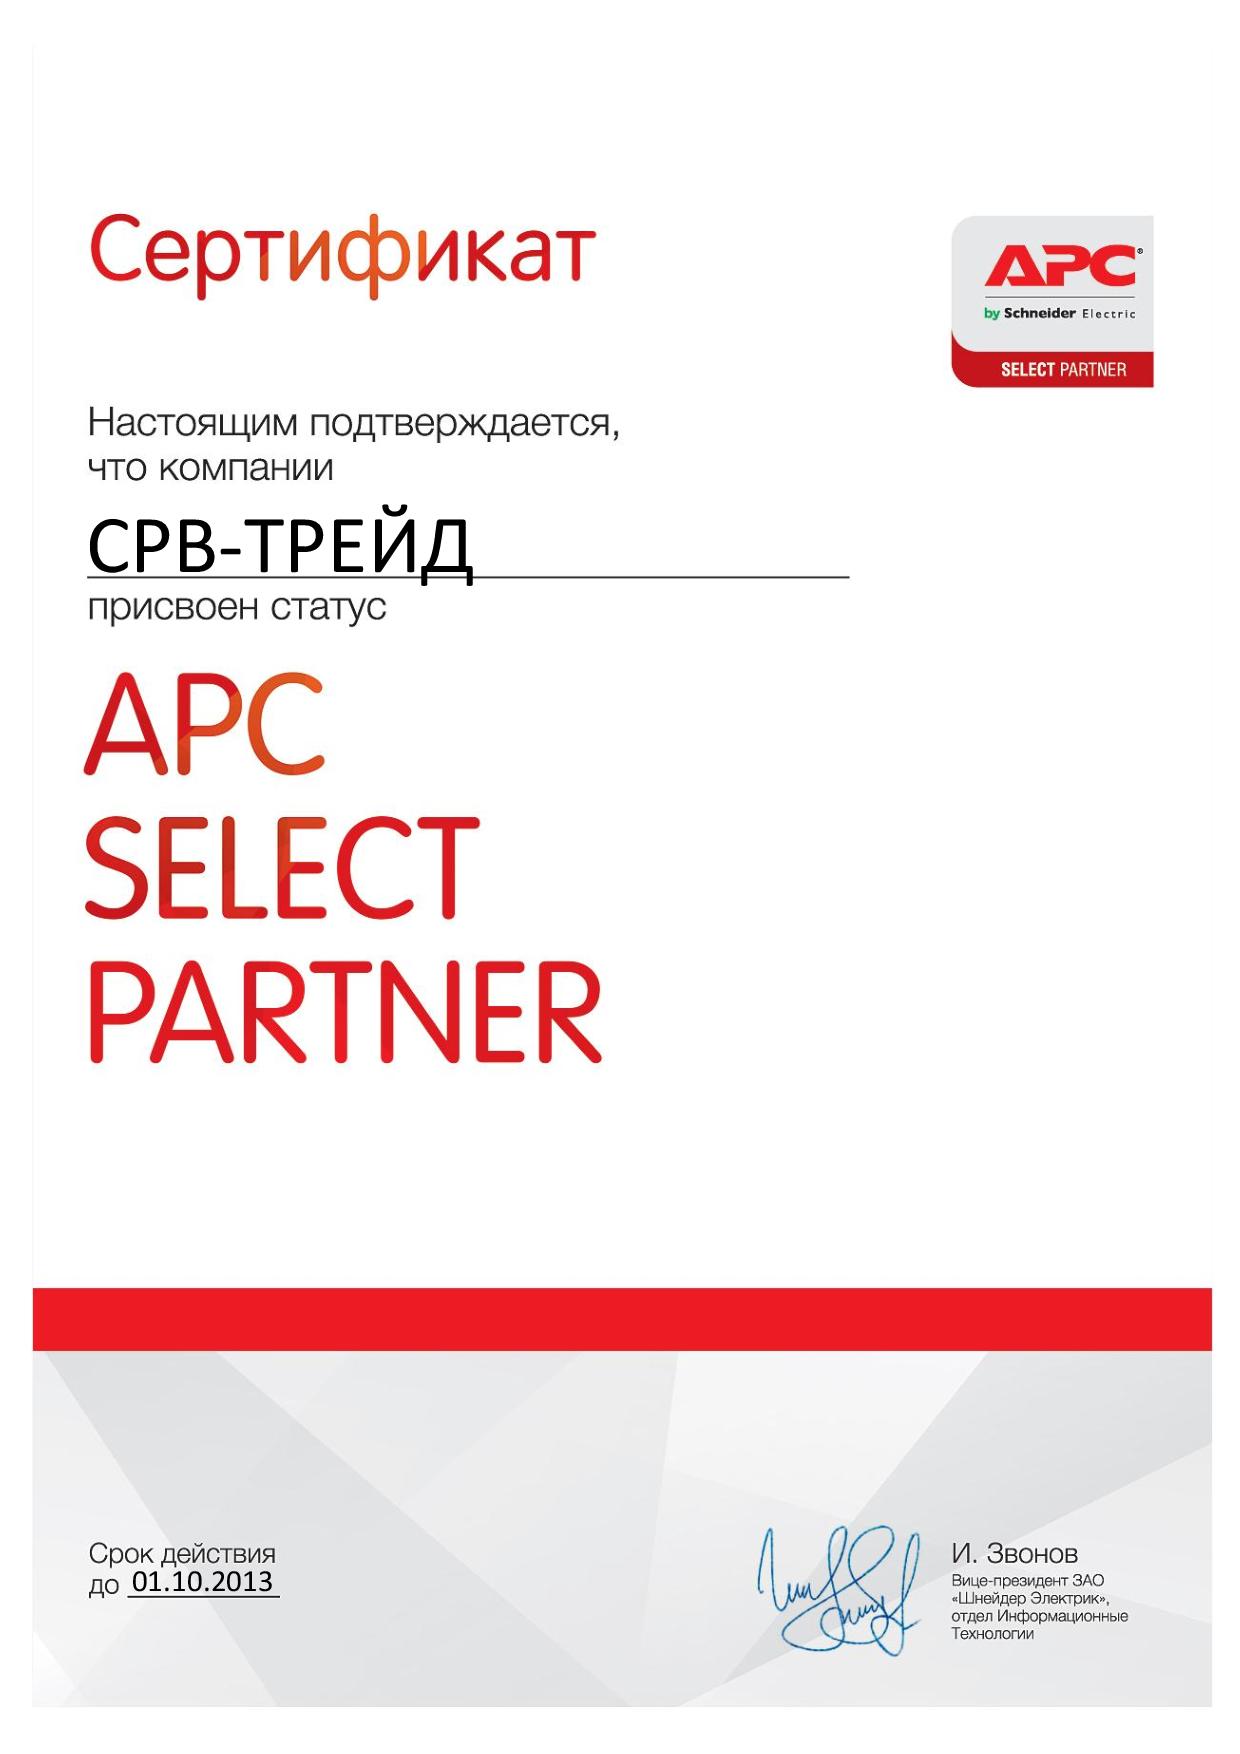 Сертификат о присвоении статуса APC Select Partner